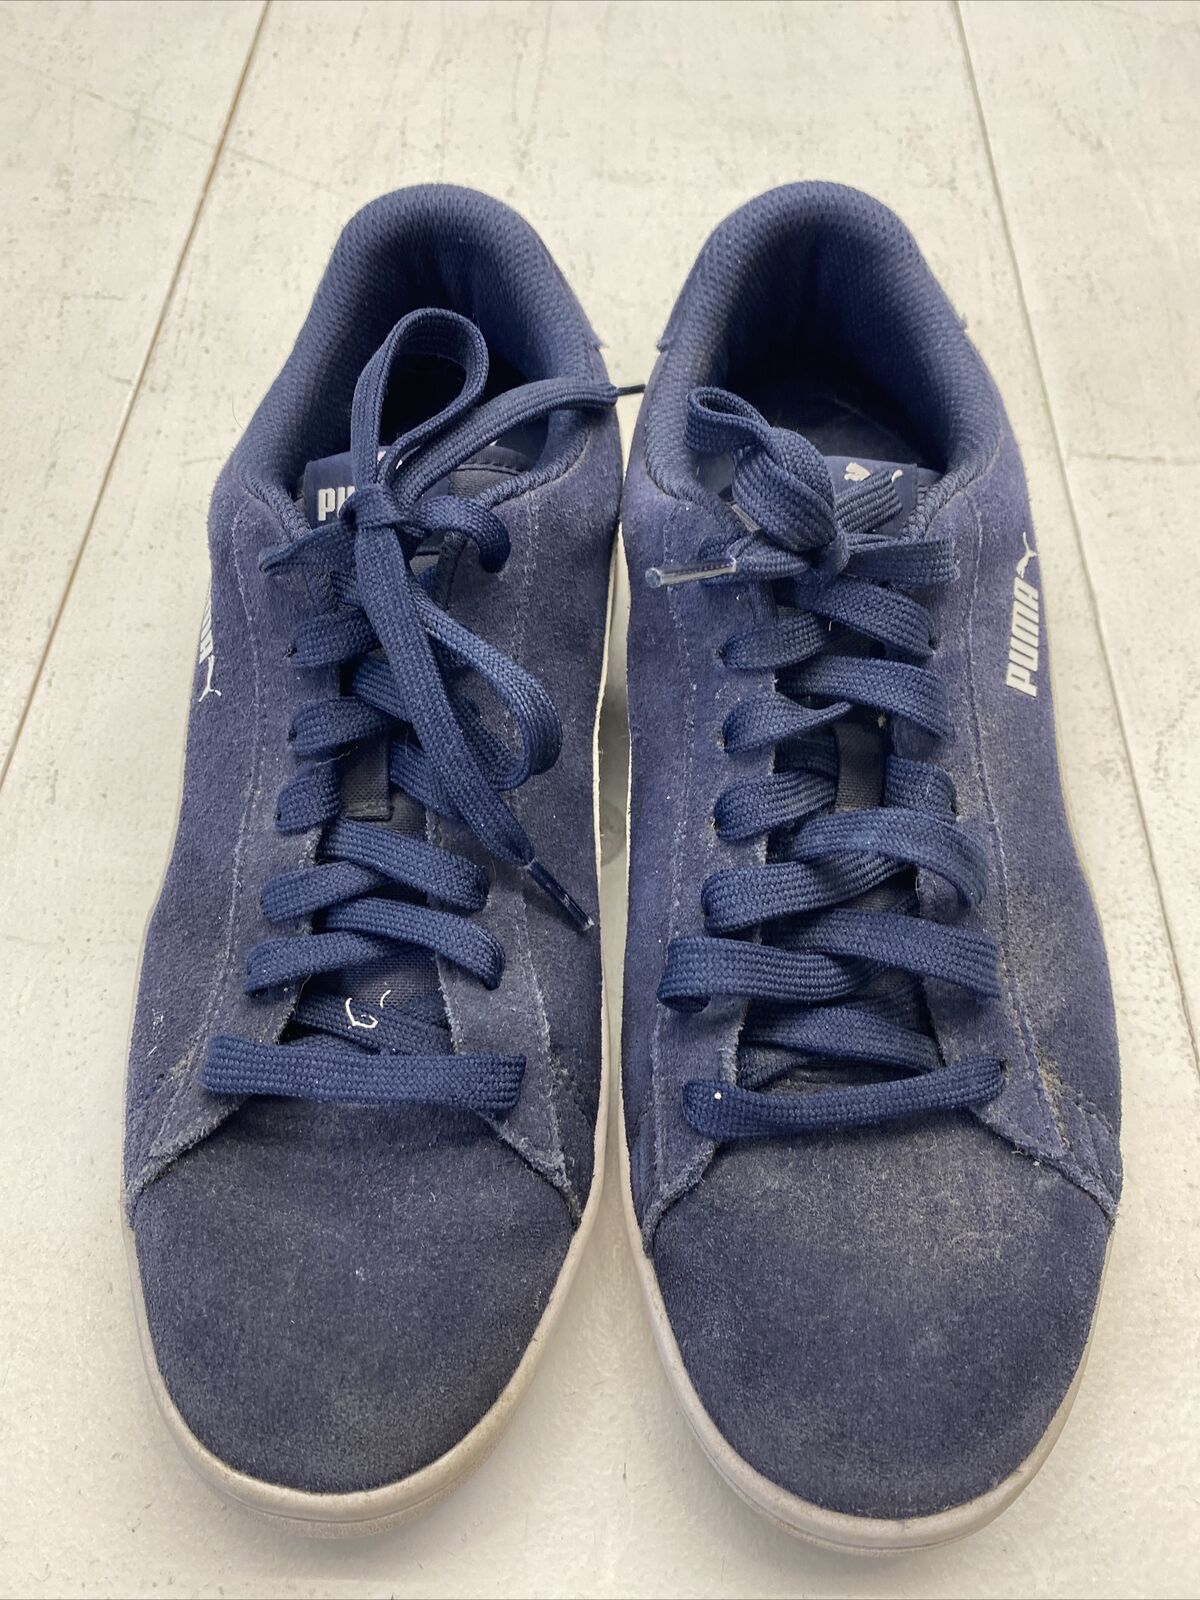 Puma Mens Smash V2 364989 04 Blue Casual Shoes Sneakers Size 10.5